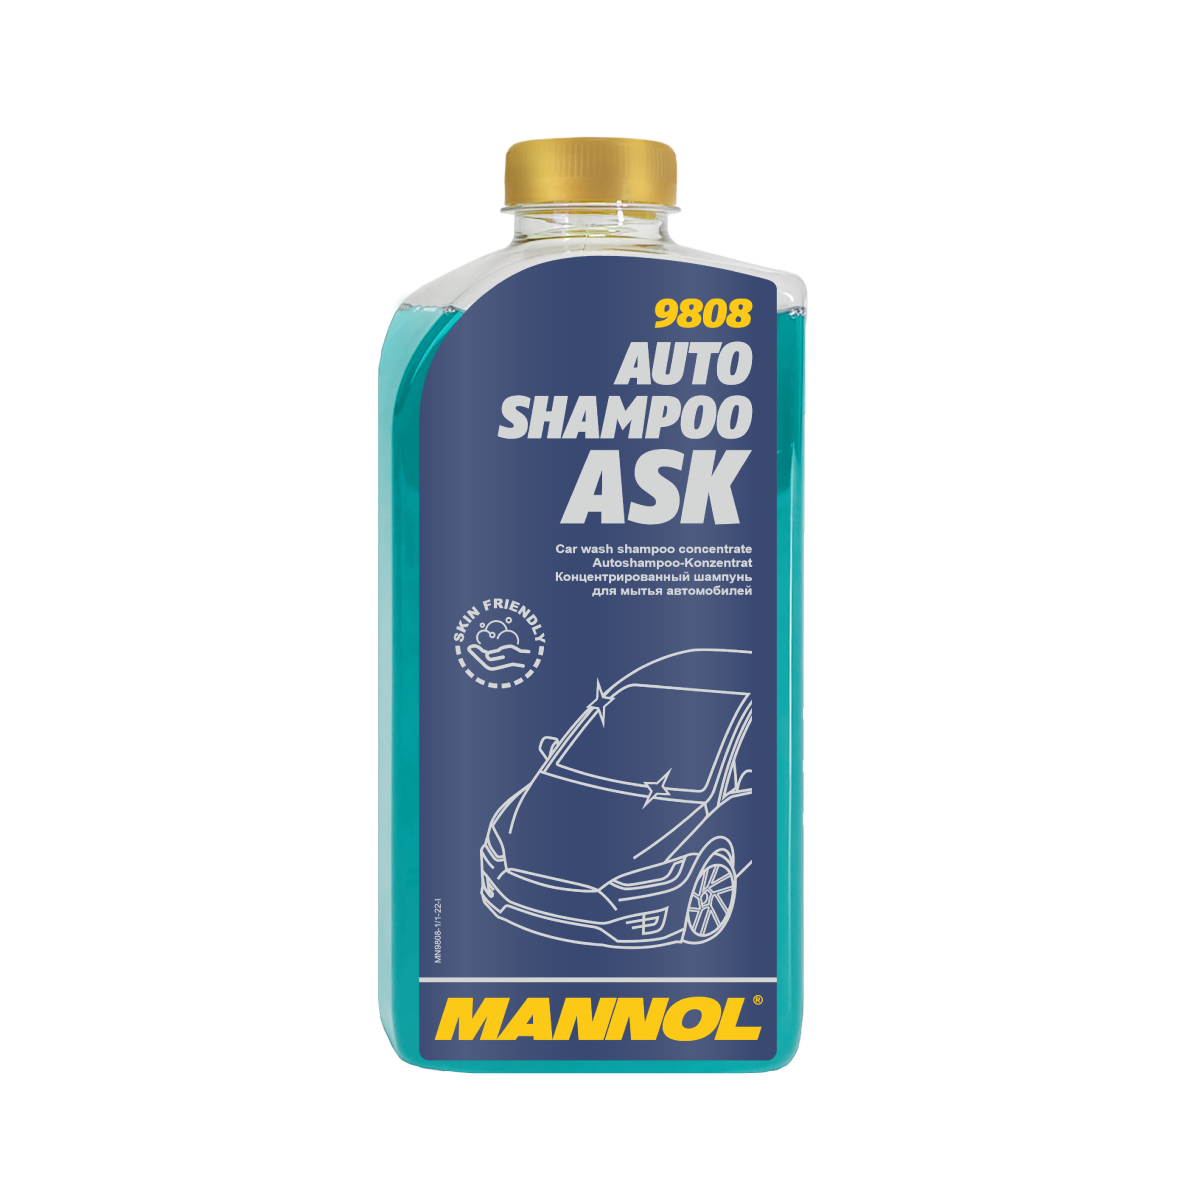 Mannol 9808 Auto Shampoo ASK Autoshampoo Konzentrat 1 Liter